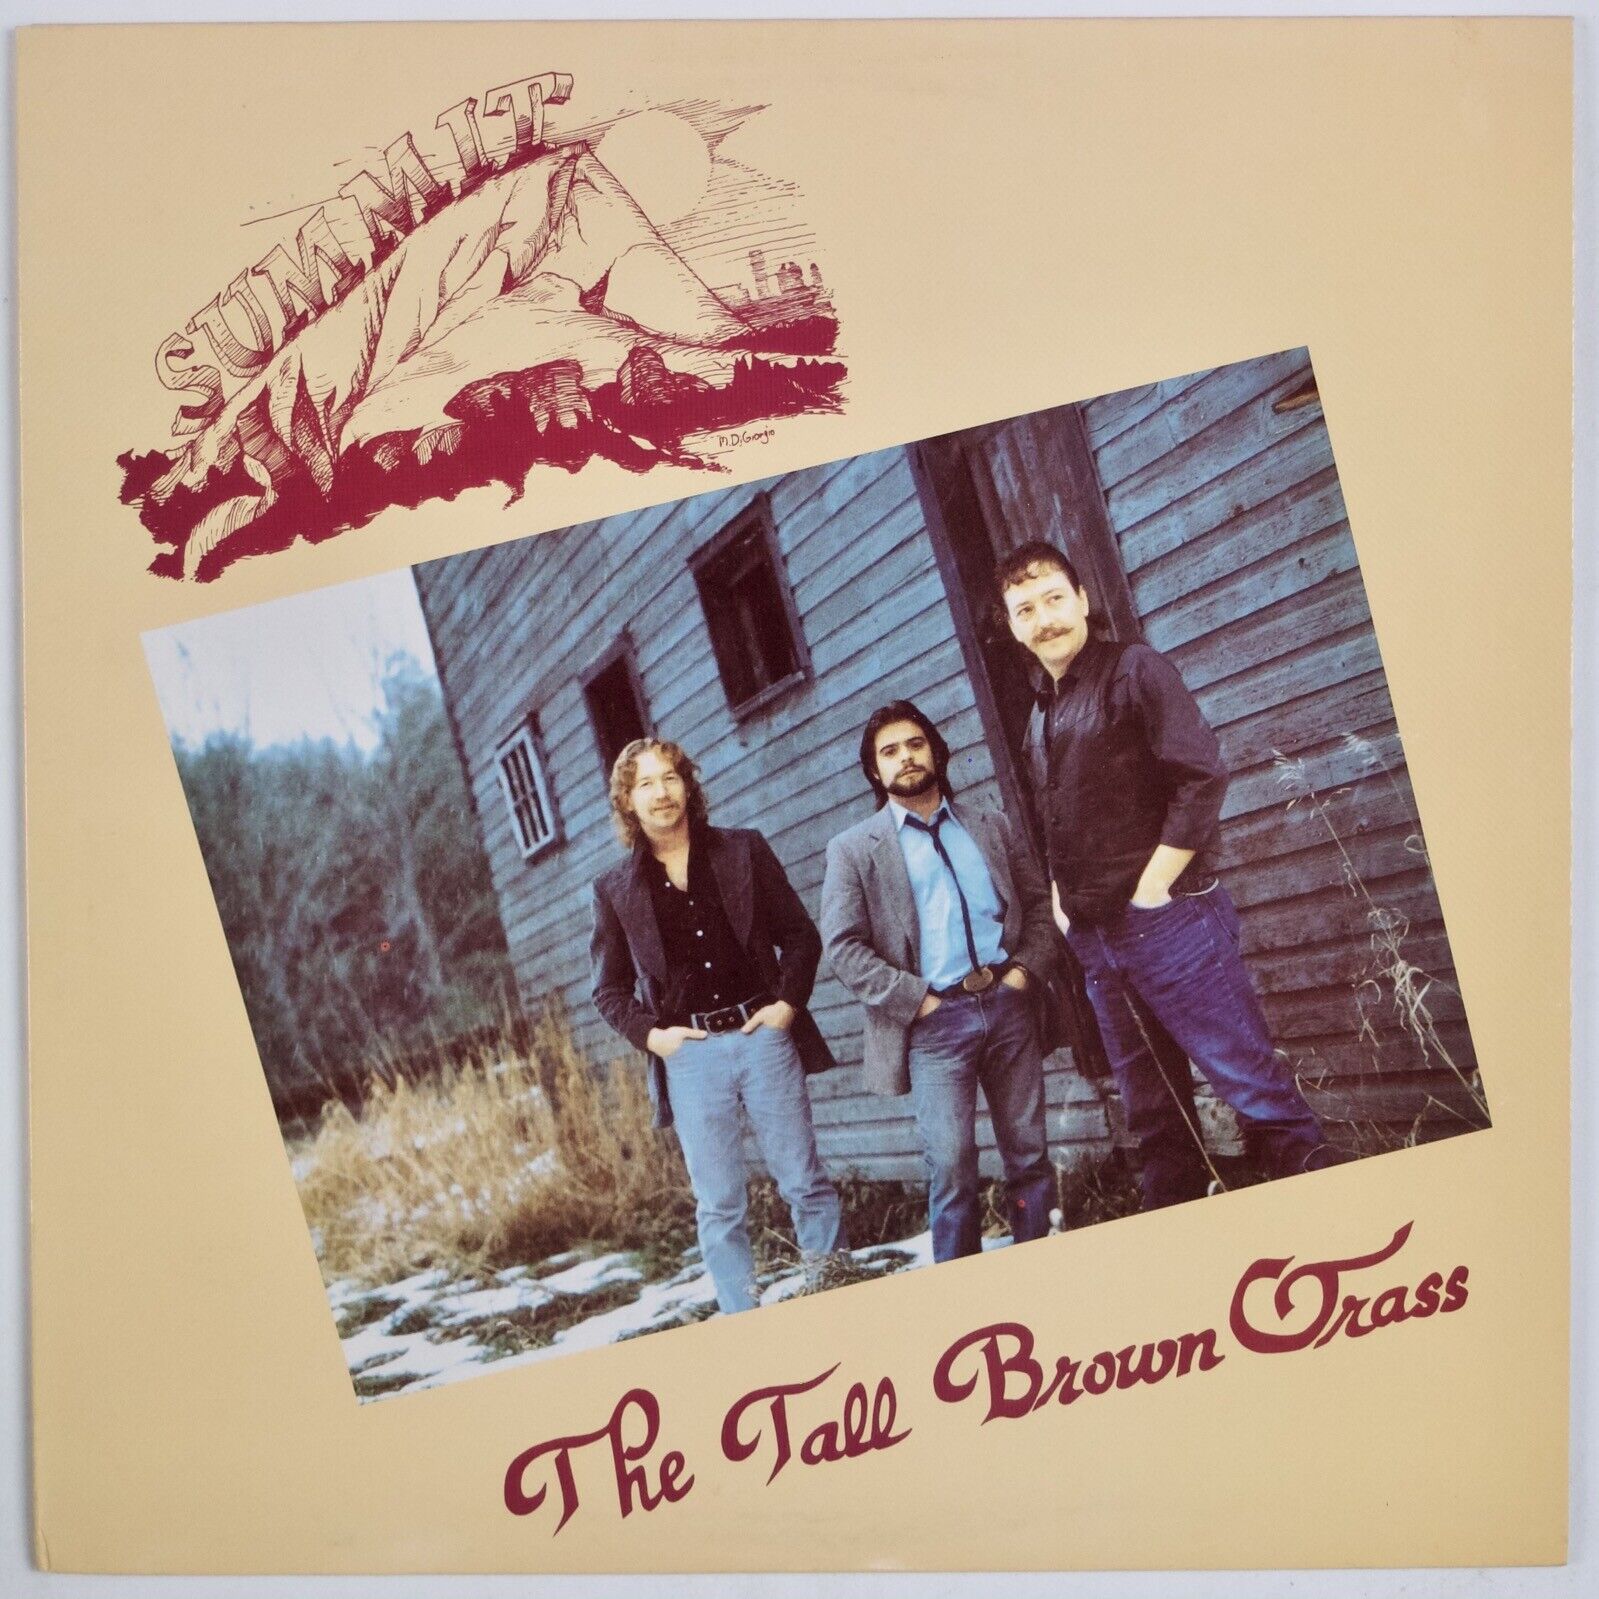 SUMMIT: Tall Brown Grass US Turquoise Records Bluegrass Vinyl LP